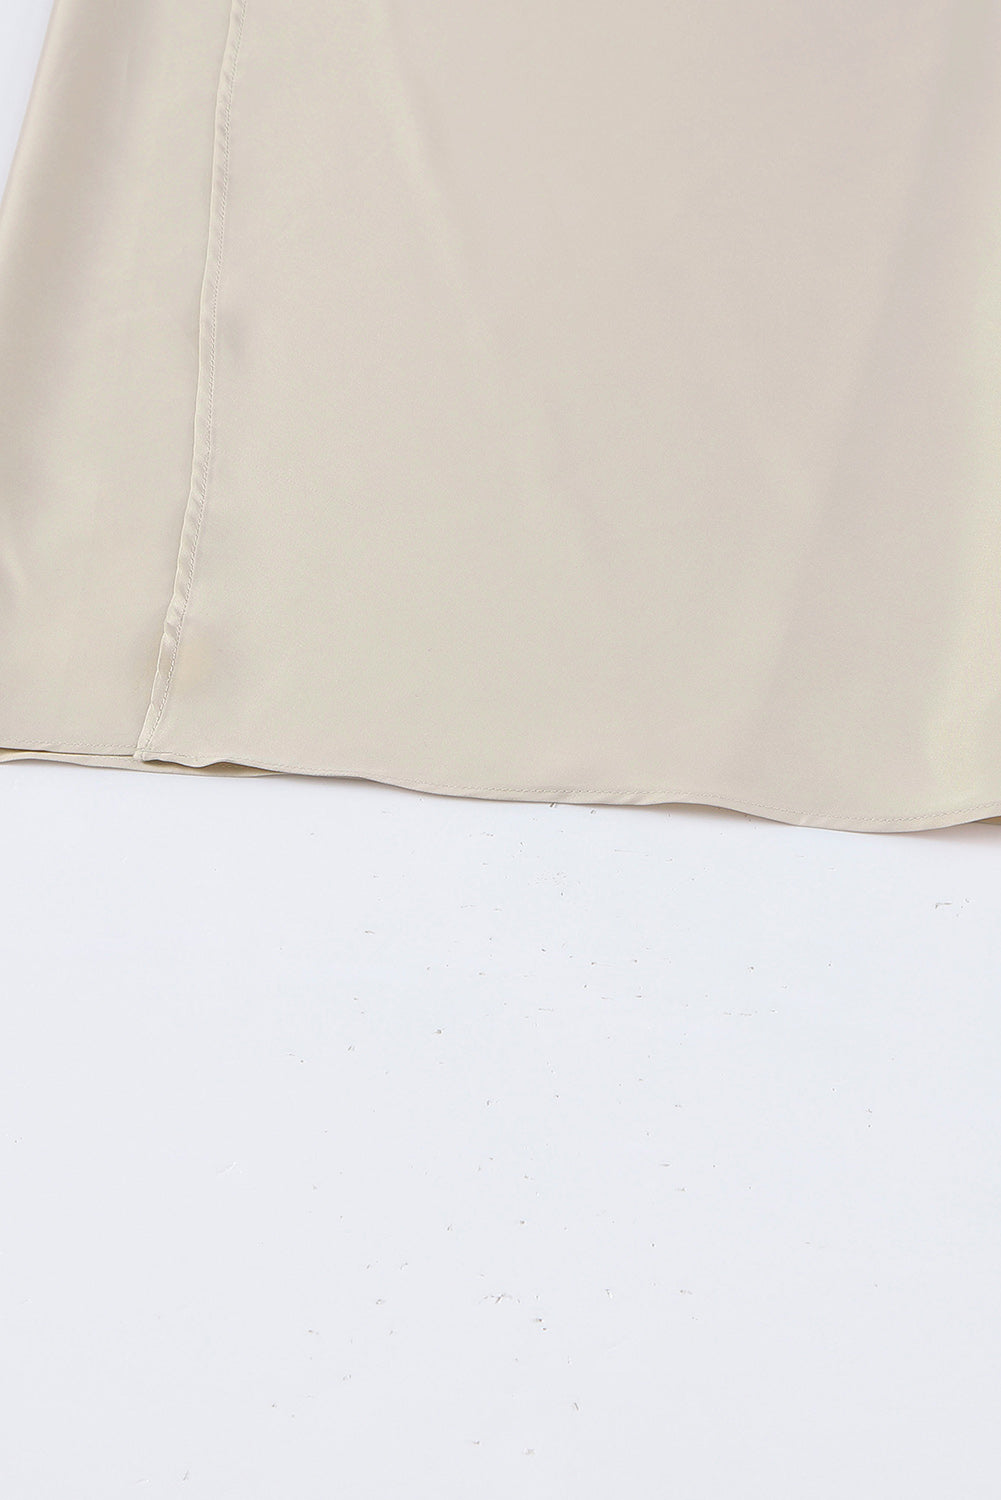 Apricot Satin Wrap Tie Side Boat Neck Long Sleeve Dress Evening Dresses JT's Designer Fashion